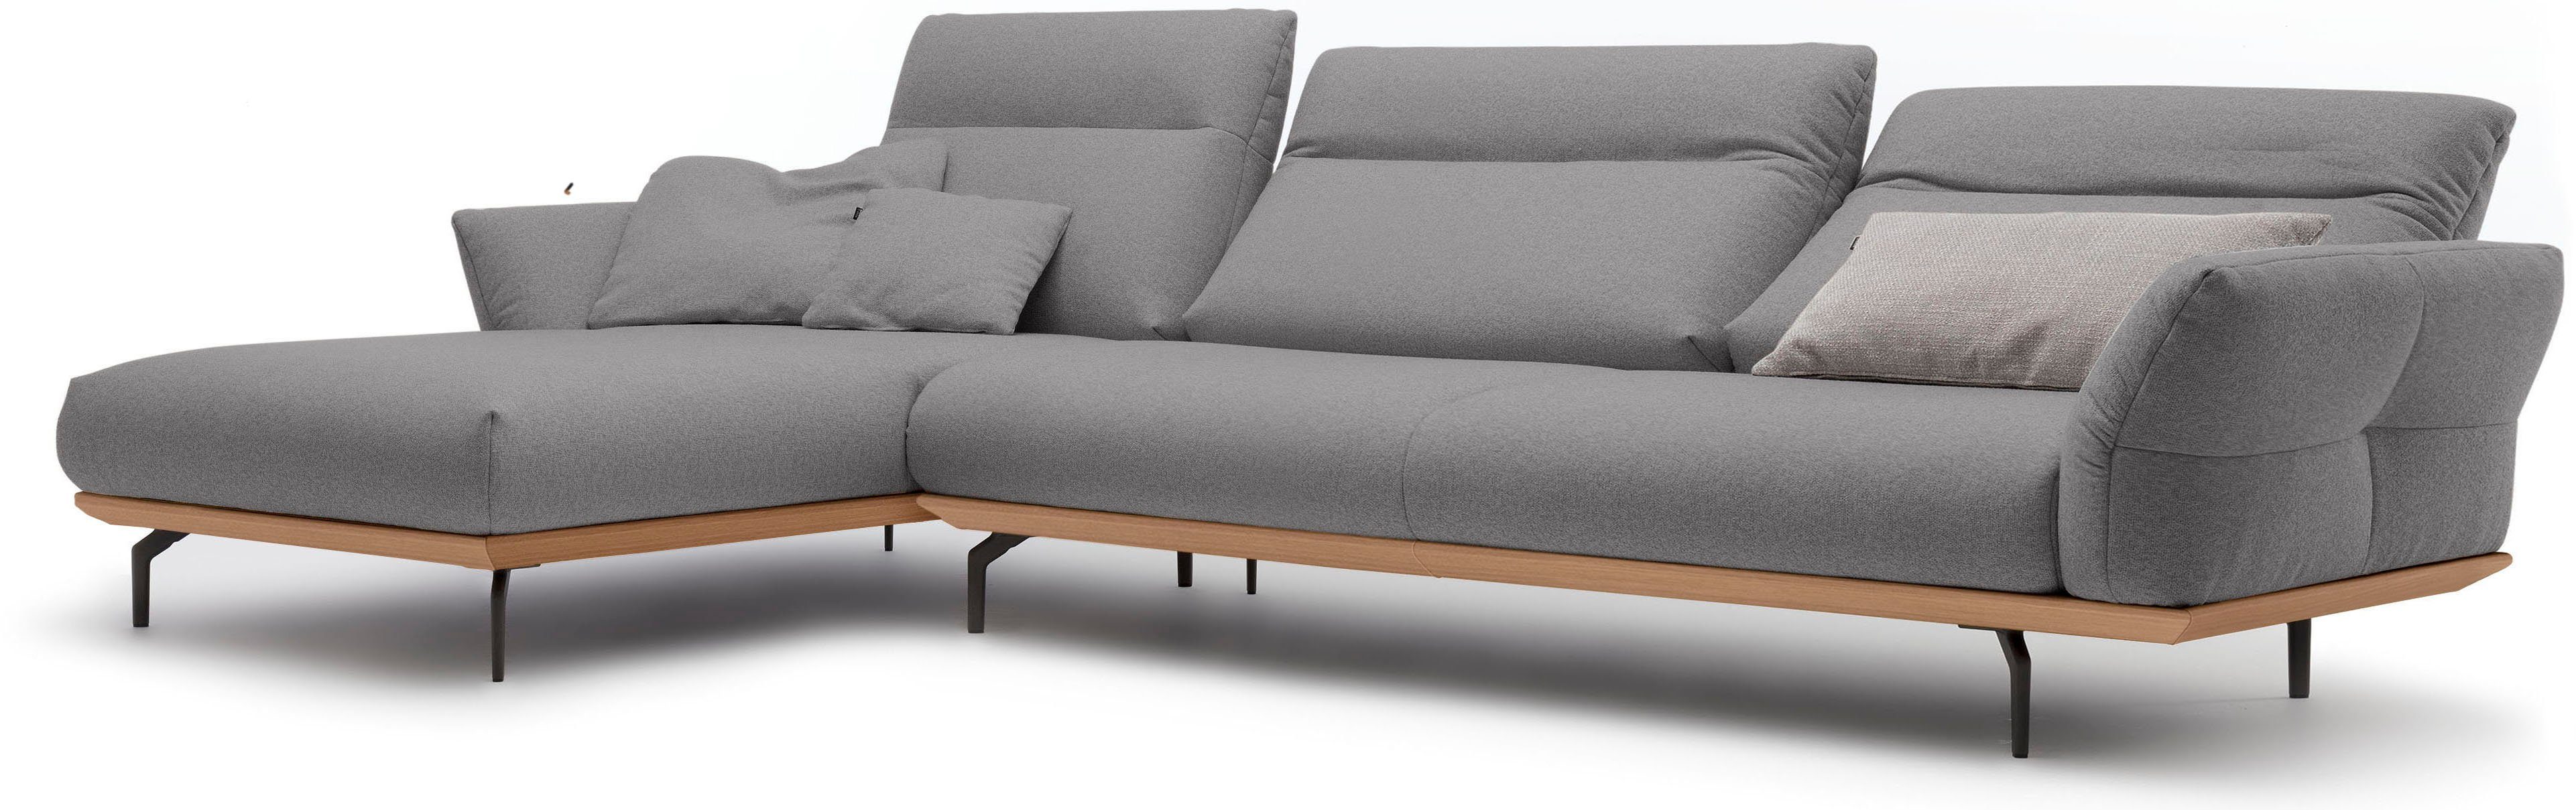 Sockel cm sofa Umbragrau, Winkelfüße Breite Eiche, 338 Ecksofa hs.460, hülsta in in